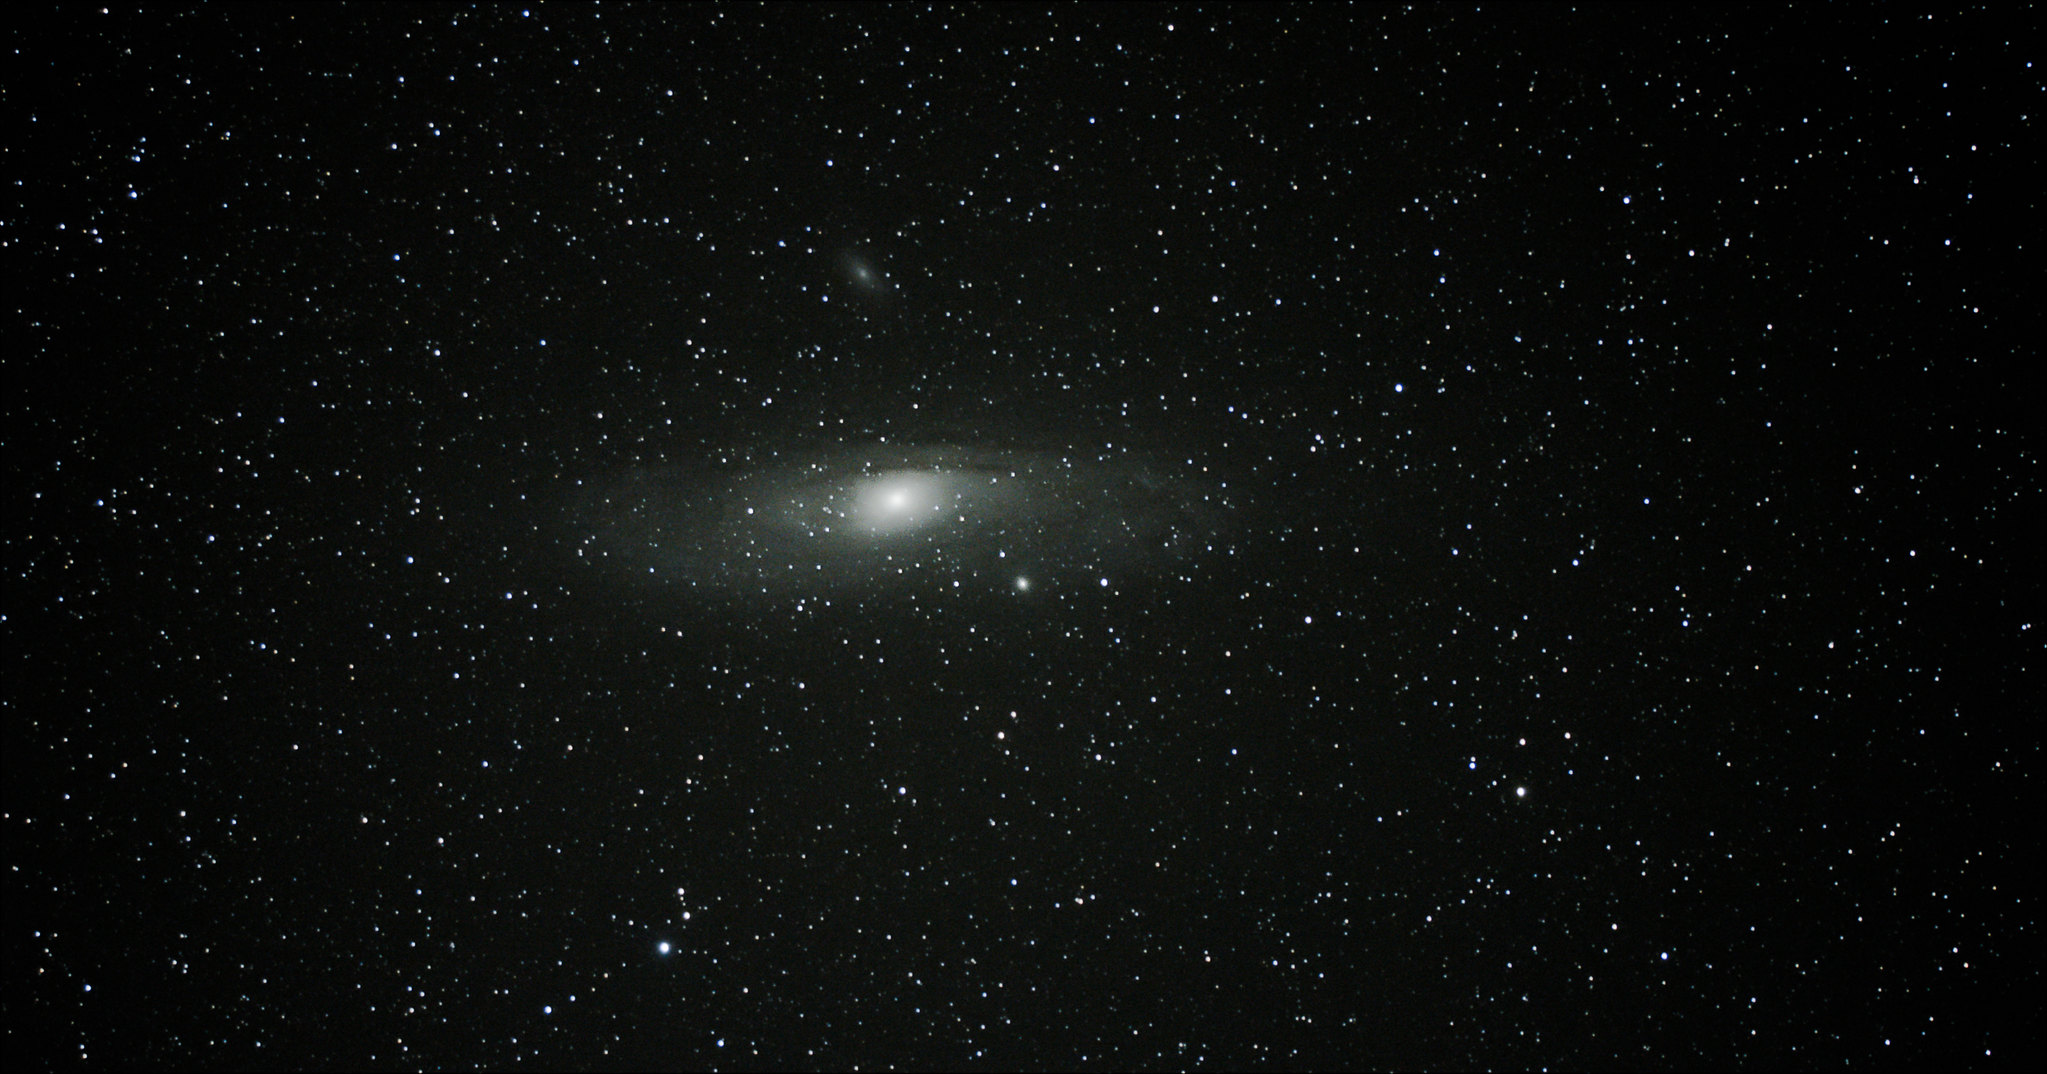 Andromeda Galaxy and satellites